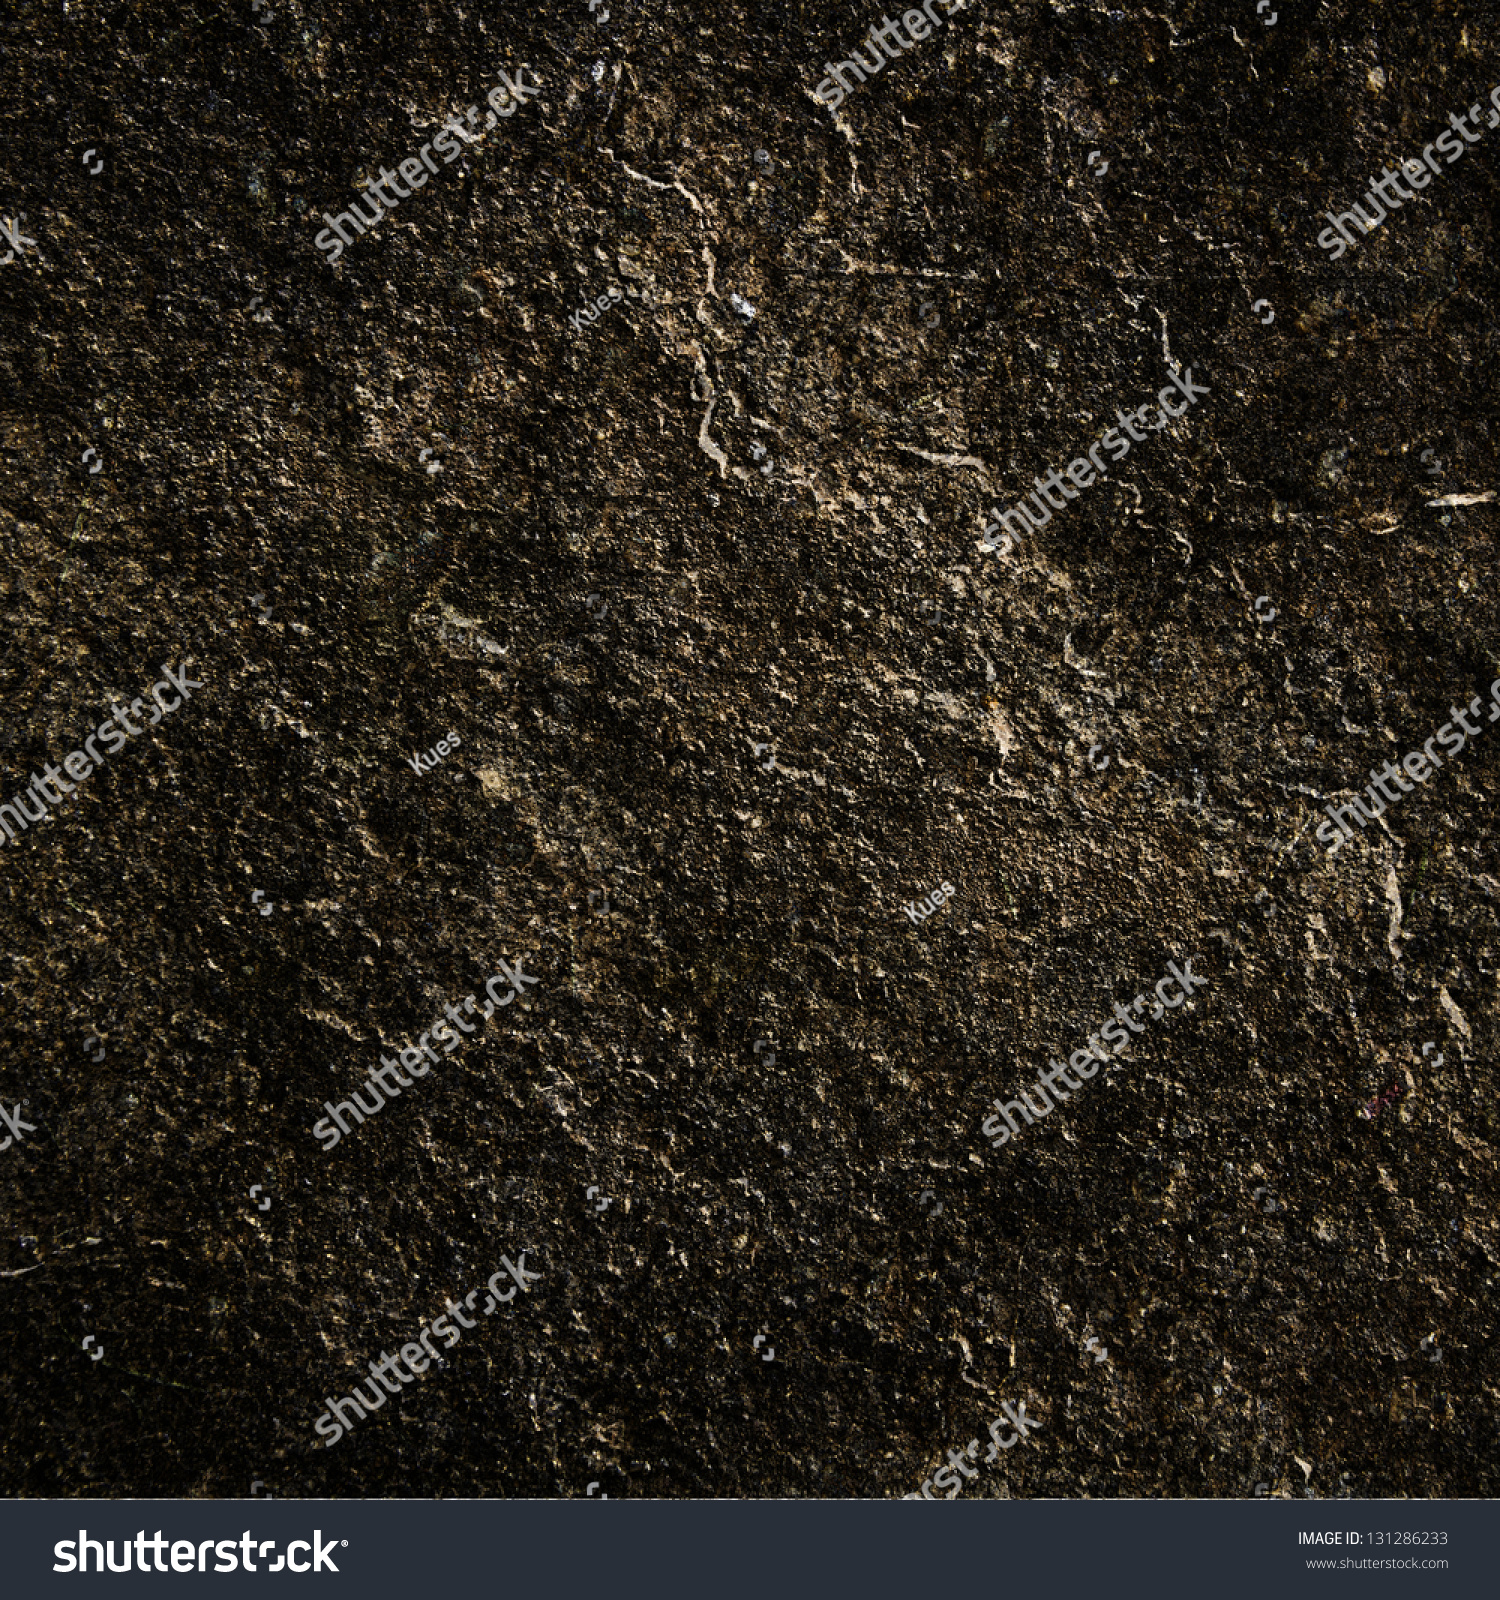 black ground texture or background #131286233